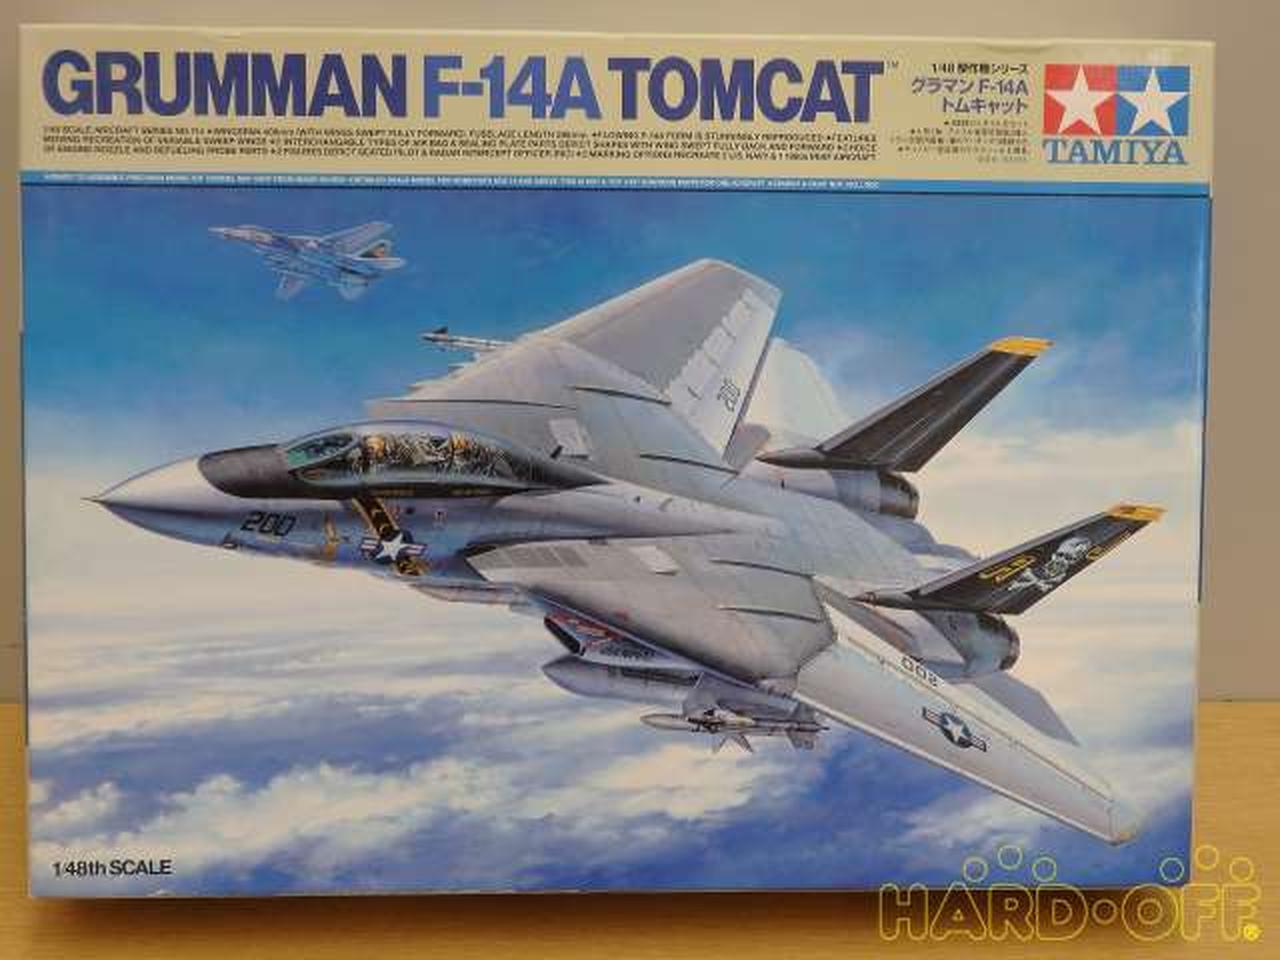 Tamiya 1/48 Grumman F-14A Tomcat Plastic Model